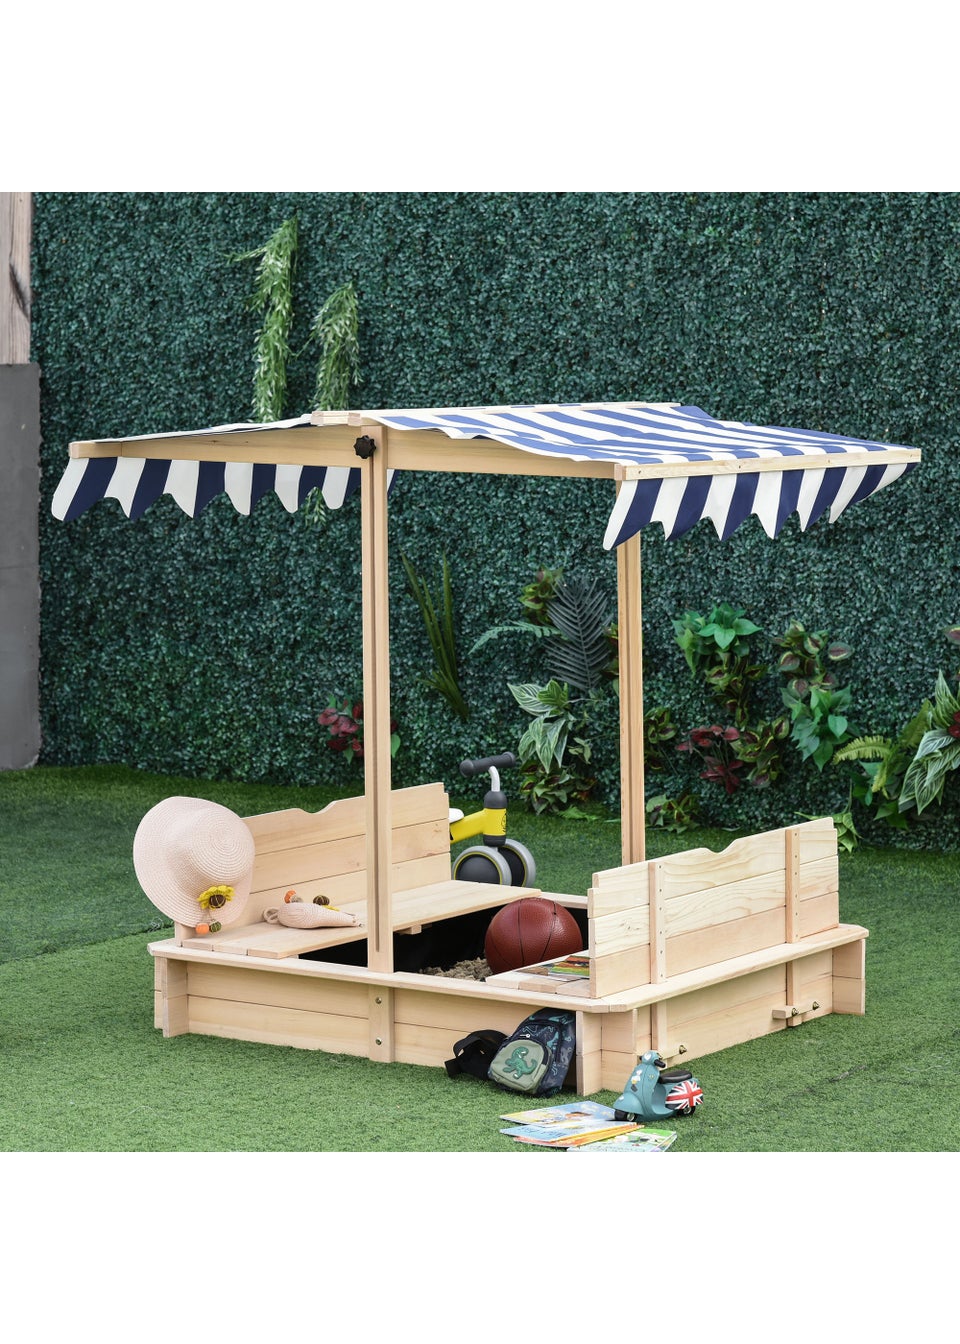 Outsunny Kids Sandpit with Bench & Adjustable Canopy (106cm x 106cm x 121cm)